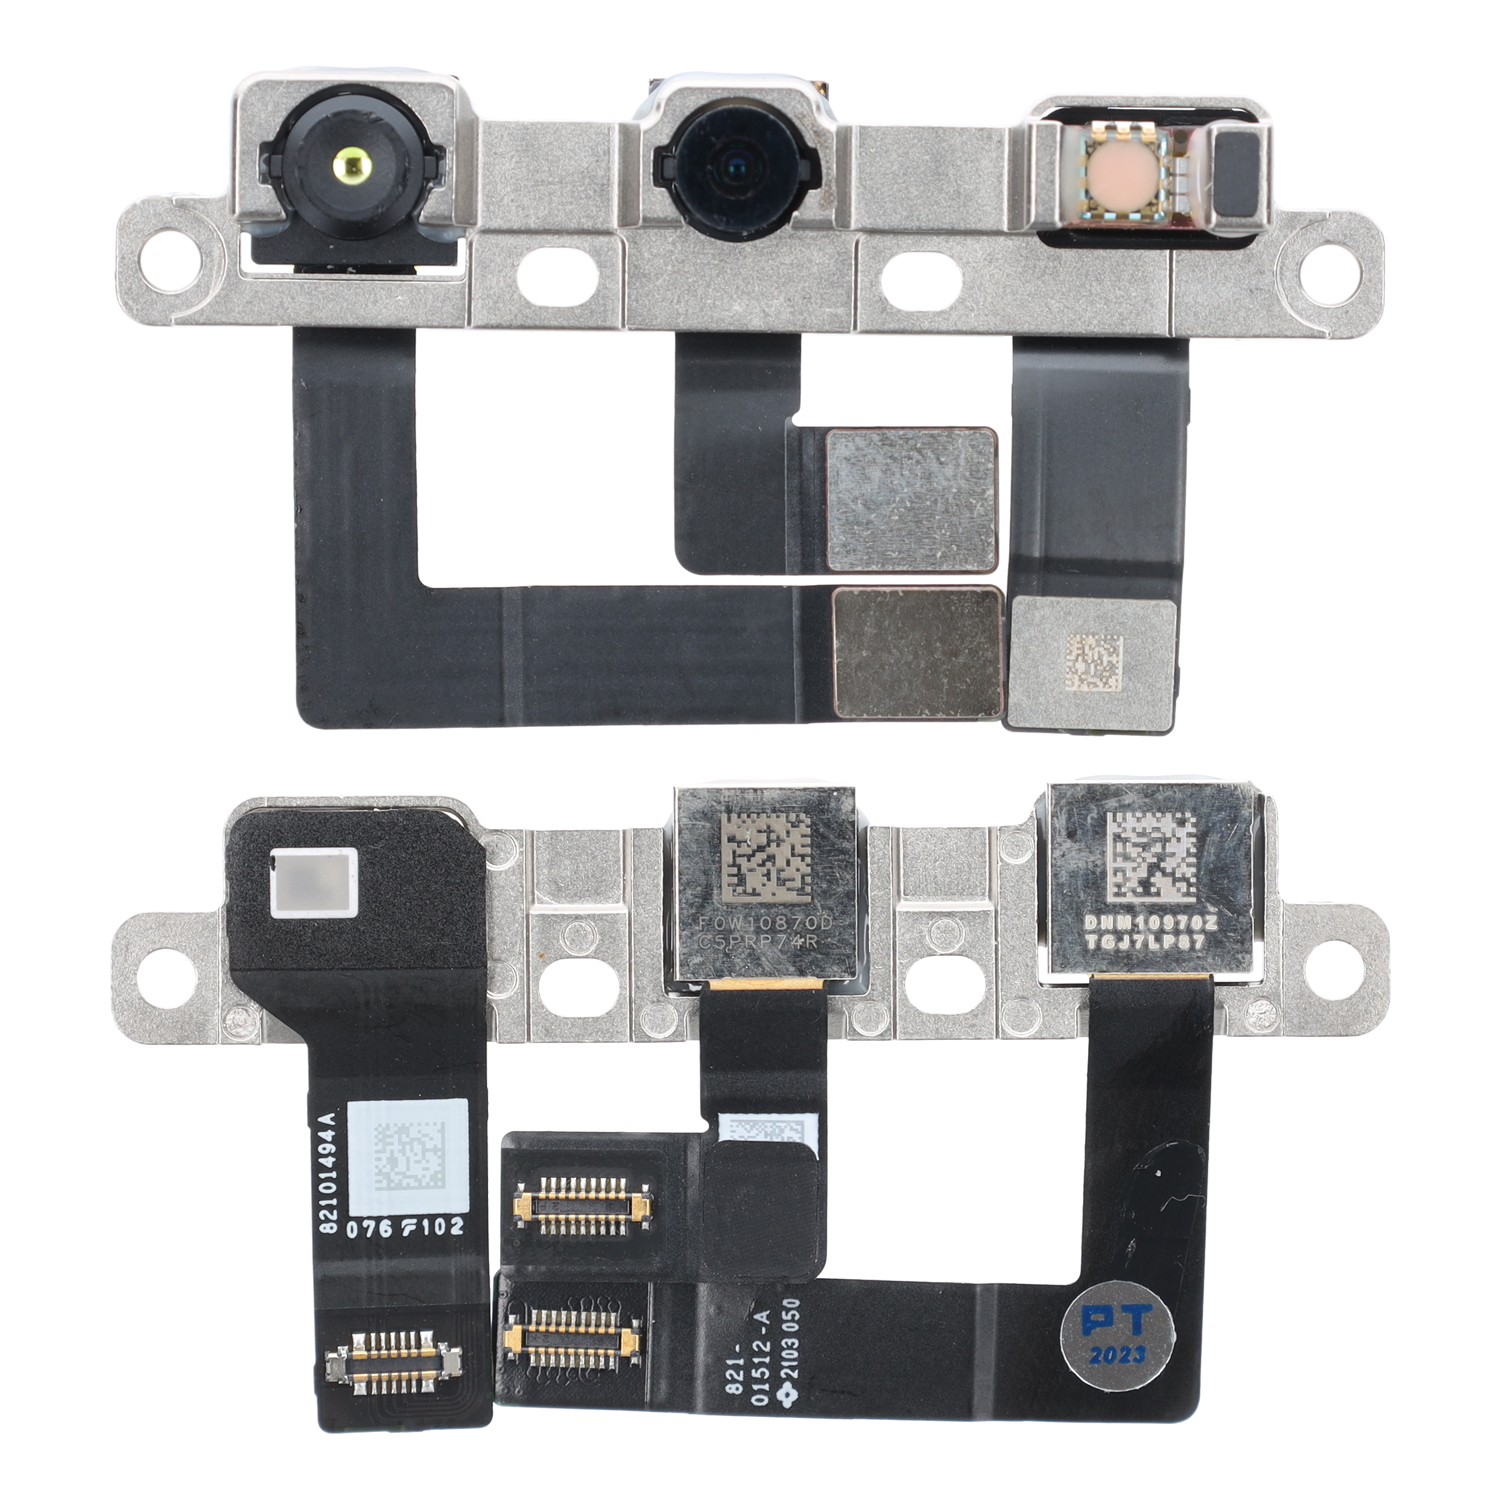 Main Camera compatibel to iPad Pro 2 11.0" /  Pro 3 11.0" /  Pro 4 11.0", iPad Pro 4 12.9" / Pro 5 12.9" / Pro 6 12.9"